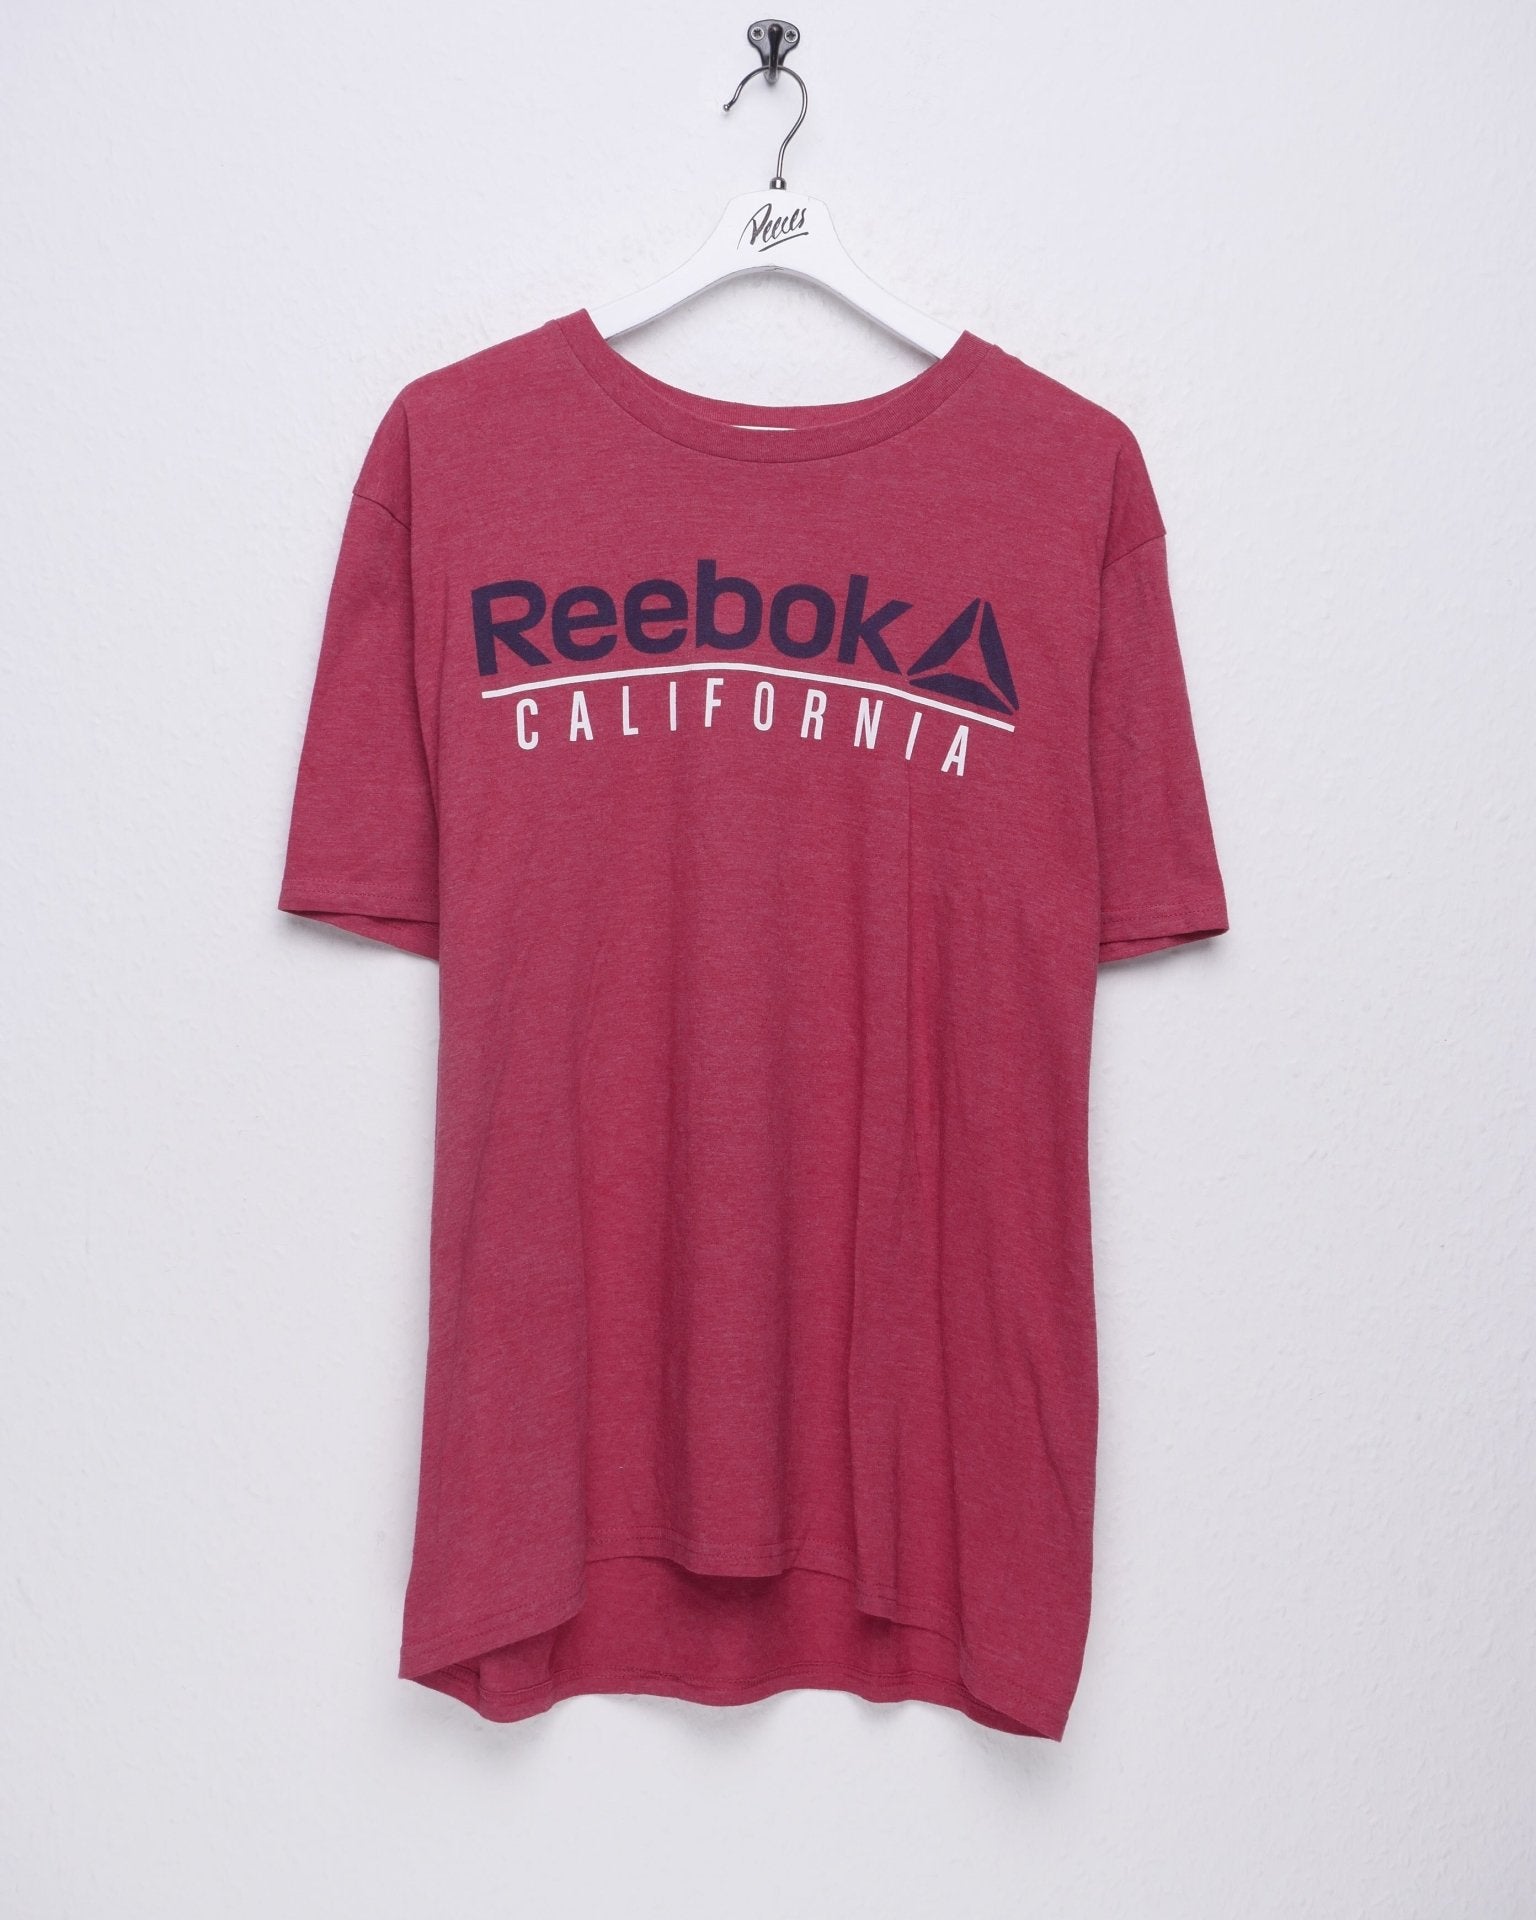 Reebok printed Spellout Vintage Shirt - Peeces